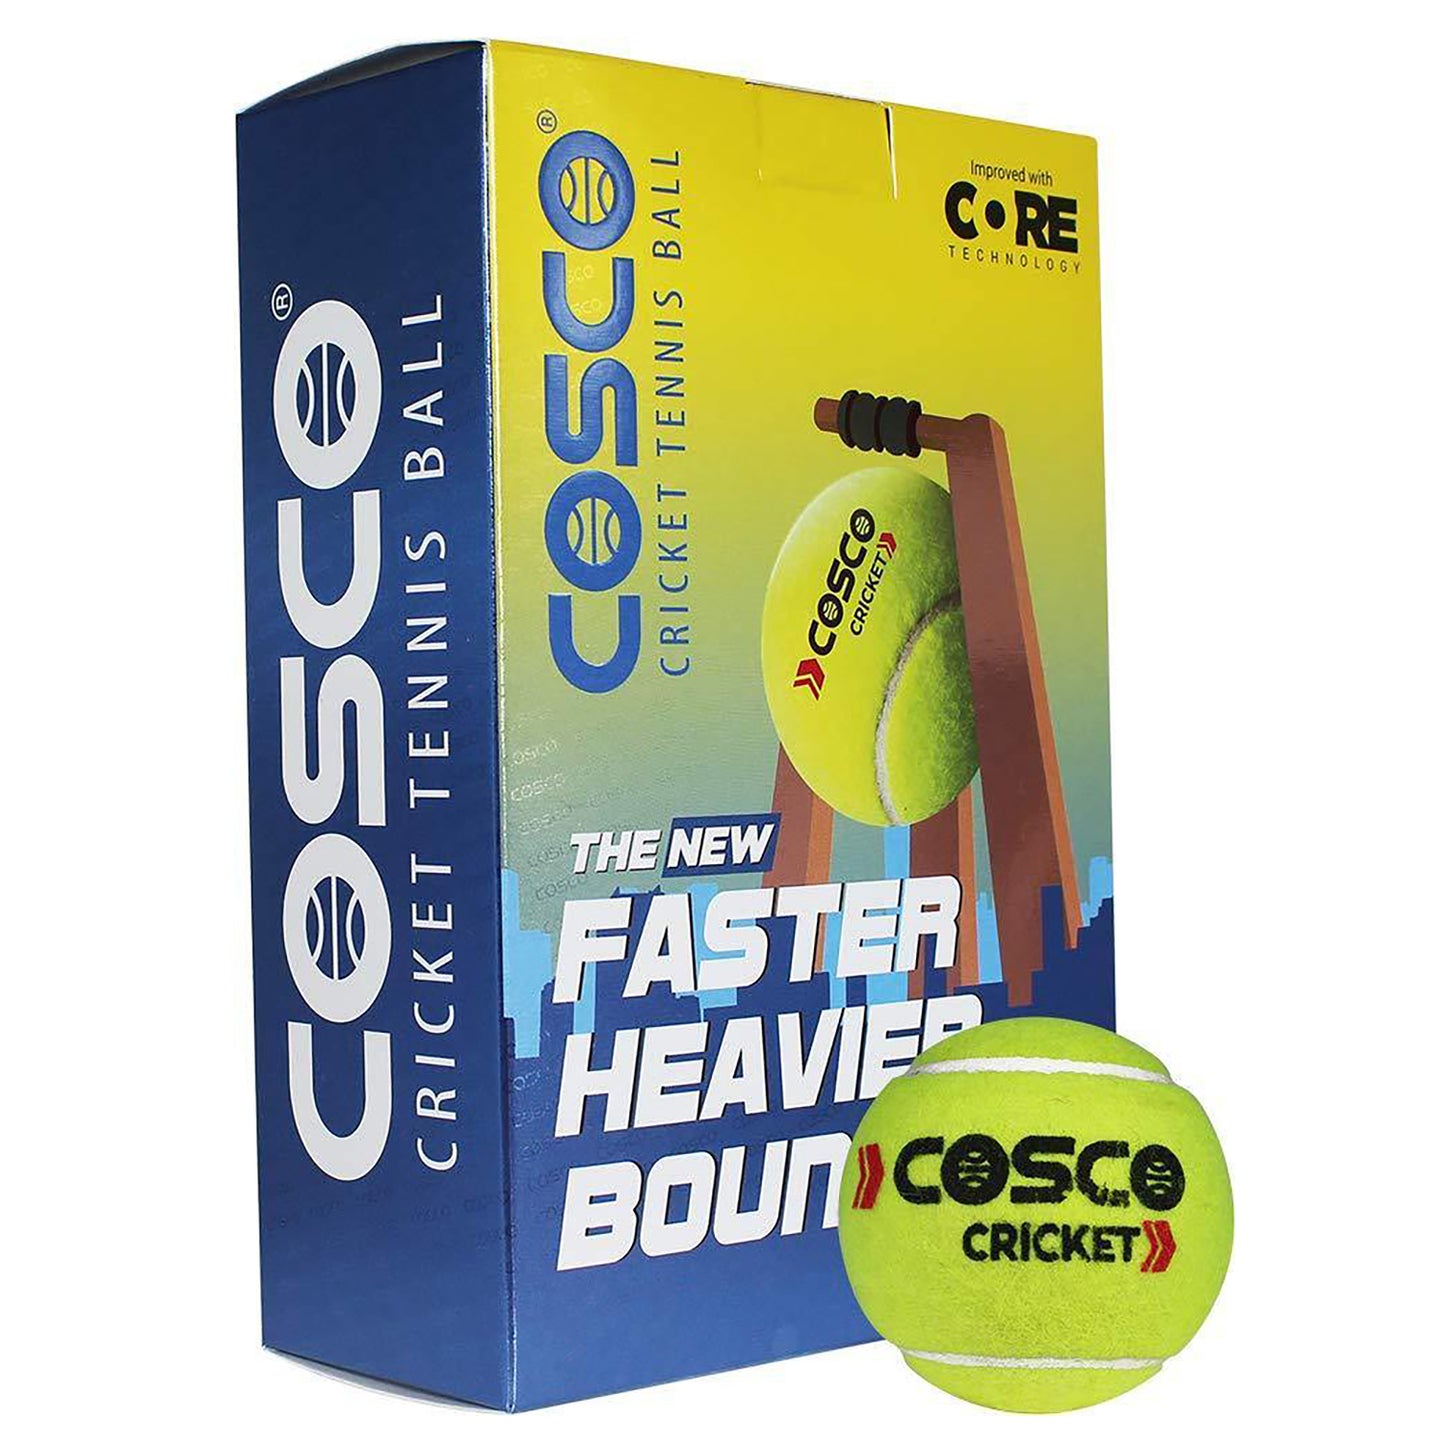 Cosco Light Cricket Tennis Ball, Pack of 6 - Best Price online Prokicksports.com